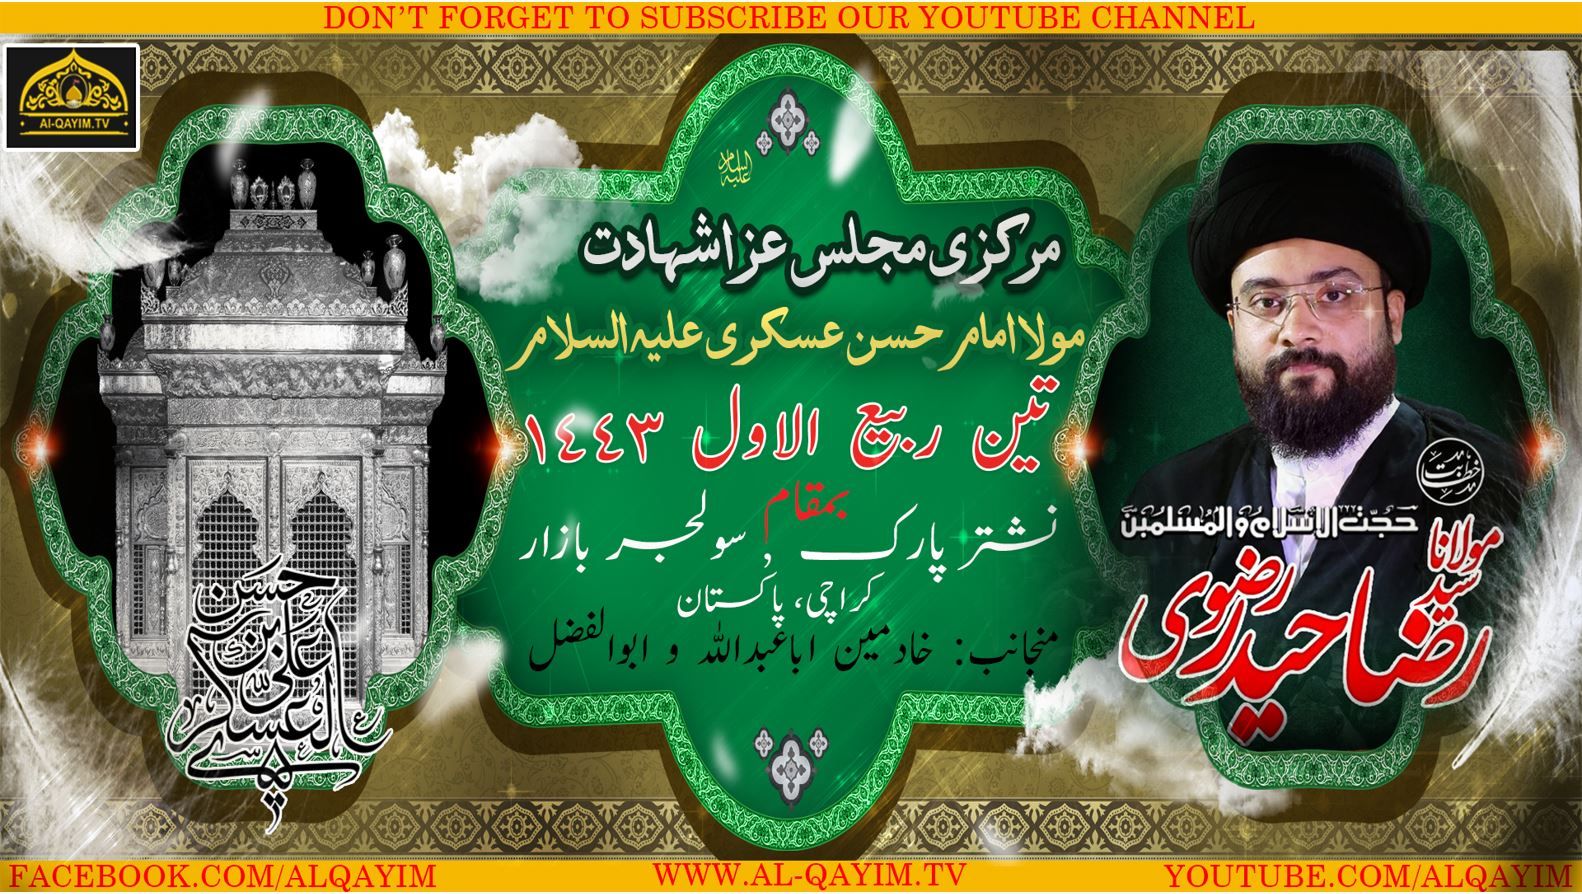 Majlis | Moulana Raza Haider Rizvi | 3rd Rabi Awal 1443/2021 - Nishtar Park Solider Bazar - Karachi